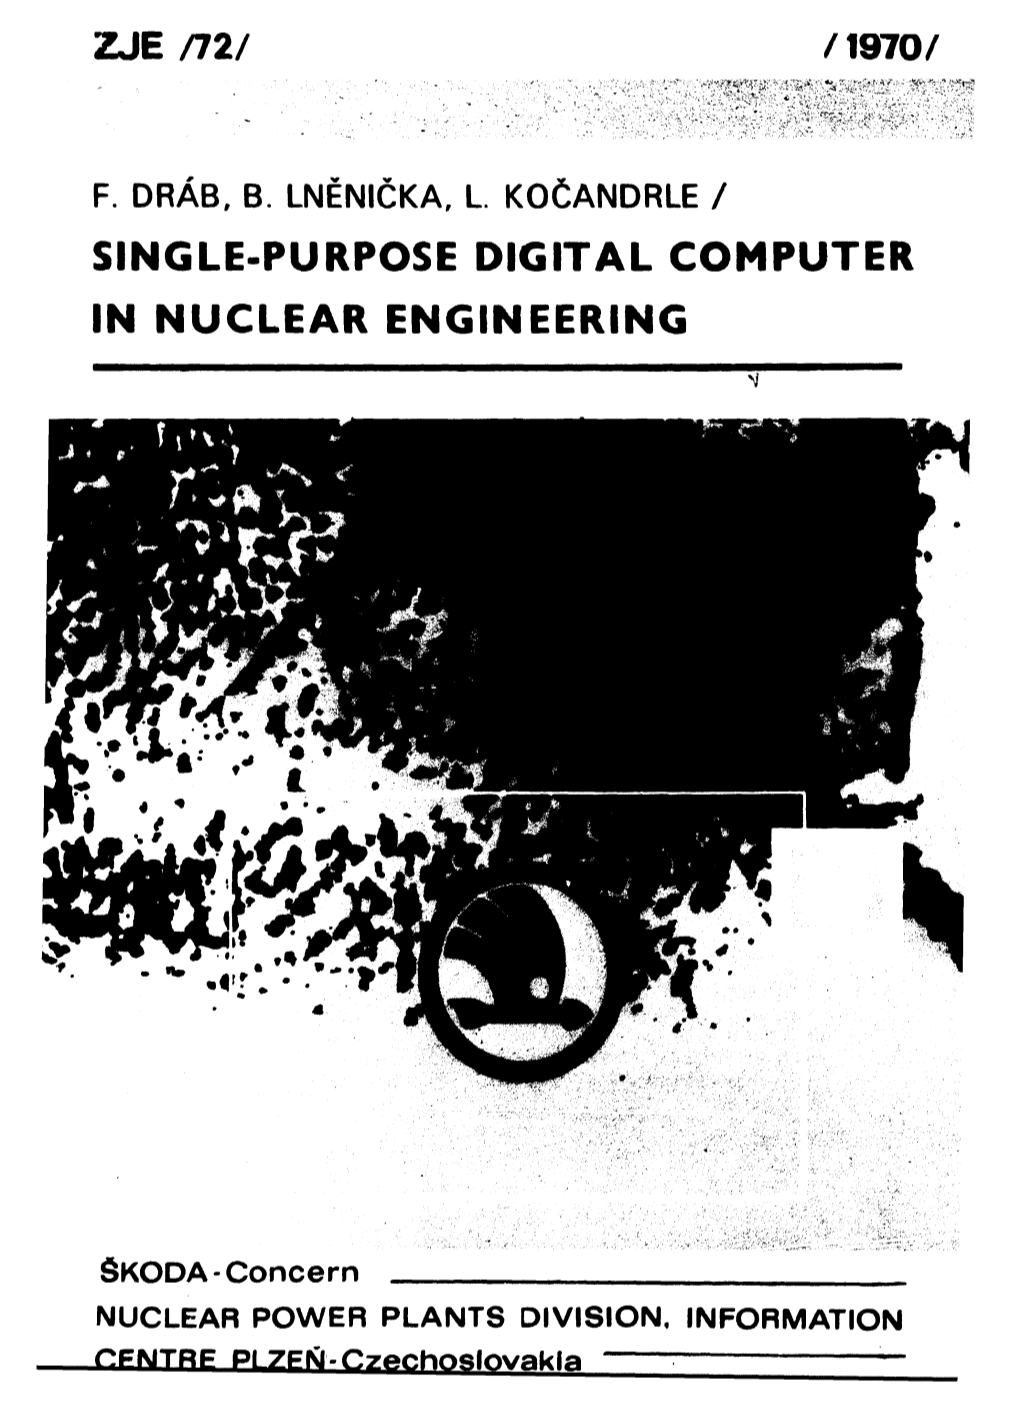 Zje/72/ Single-Purpose Digital Computer in Nuclear Engineering